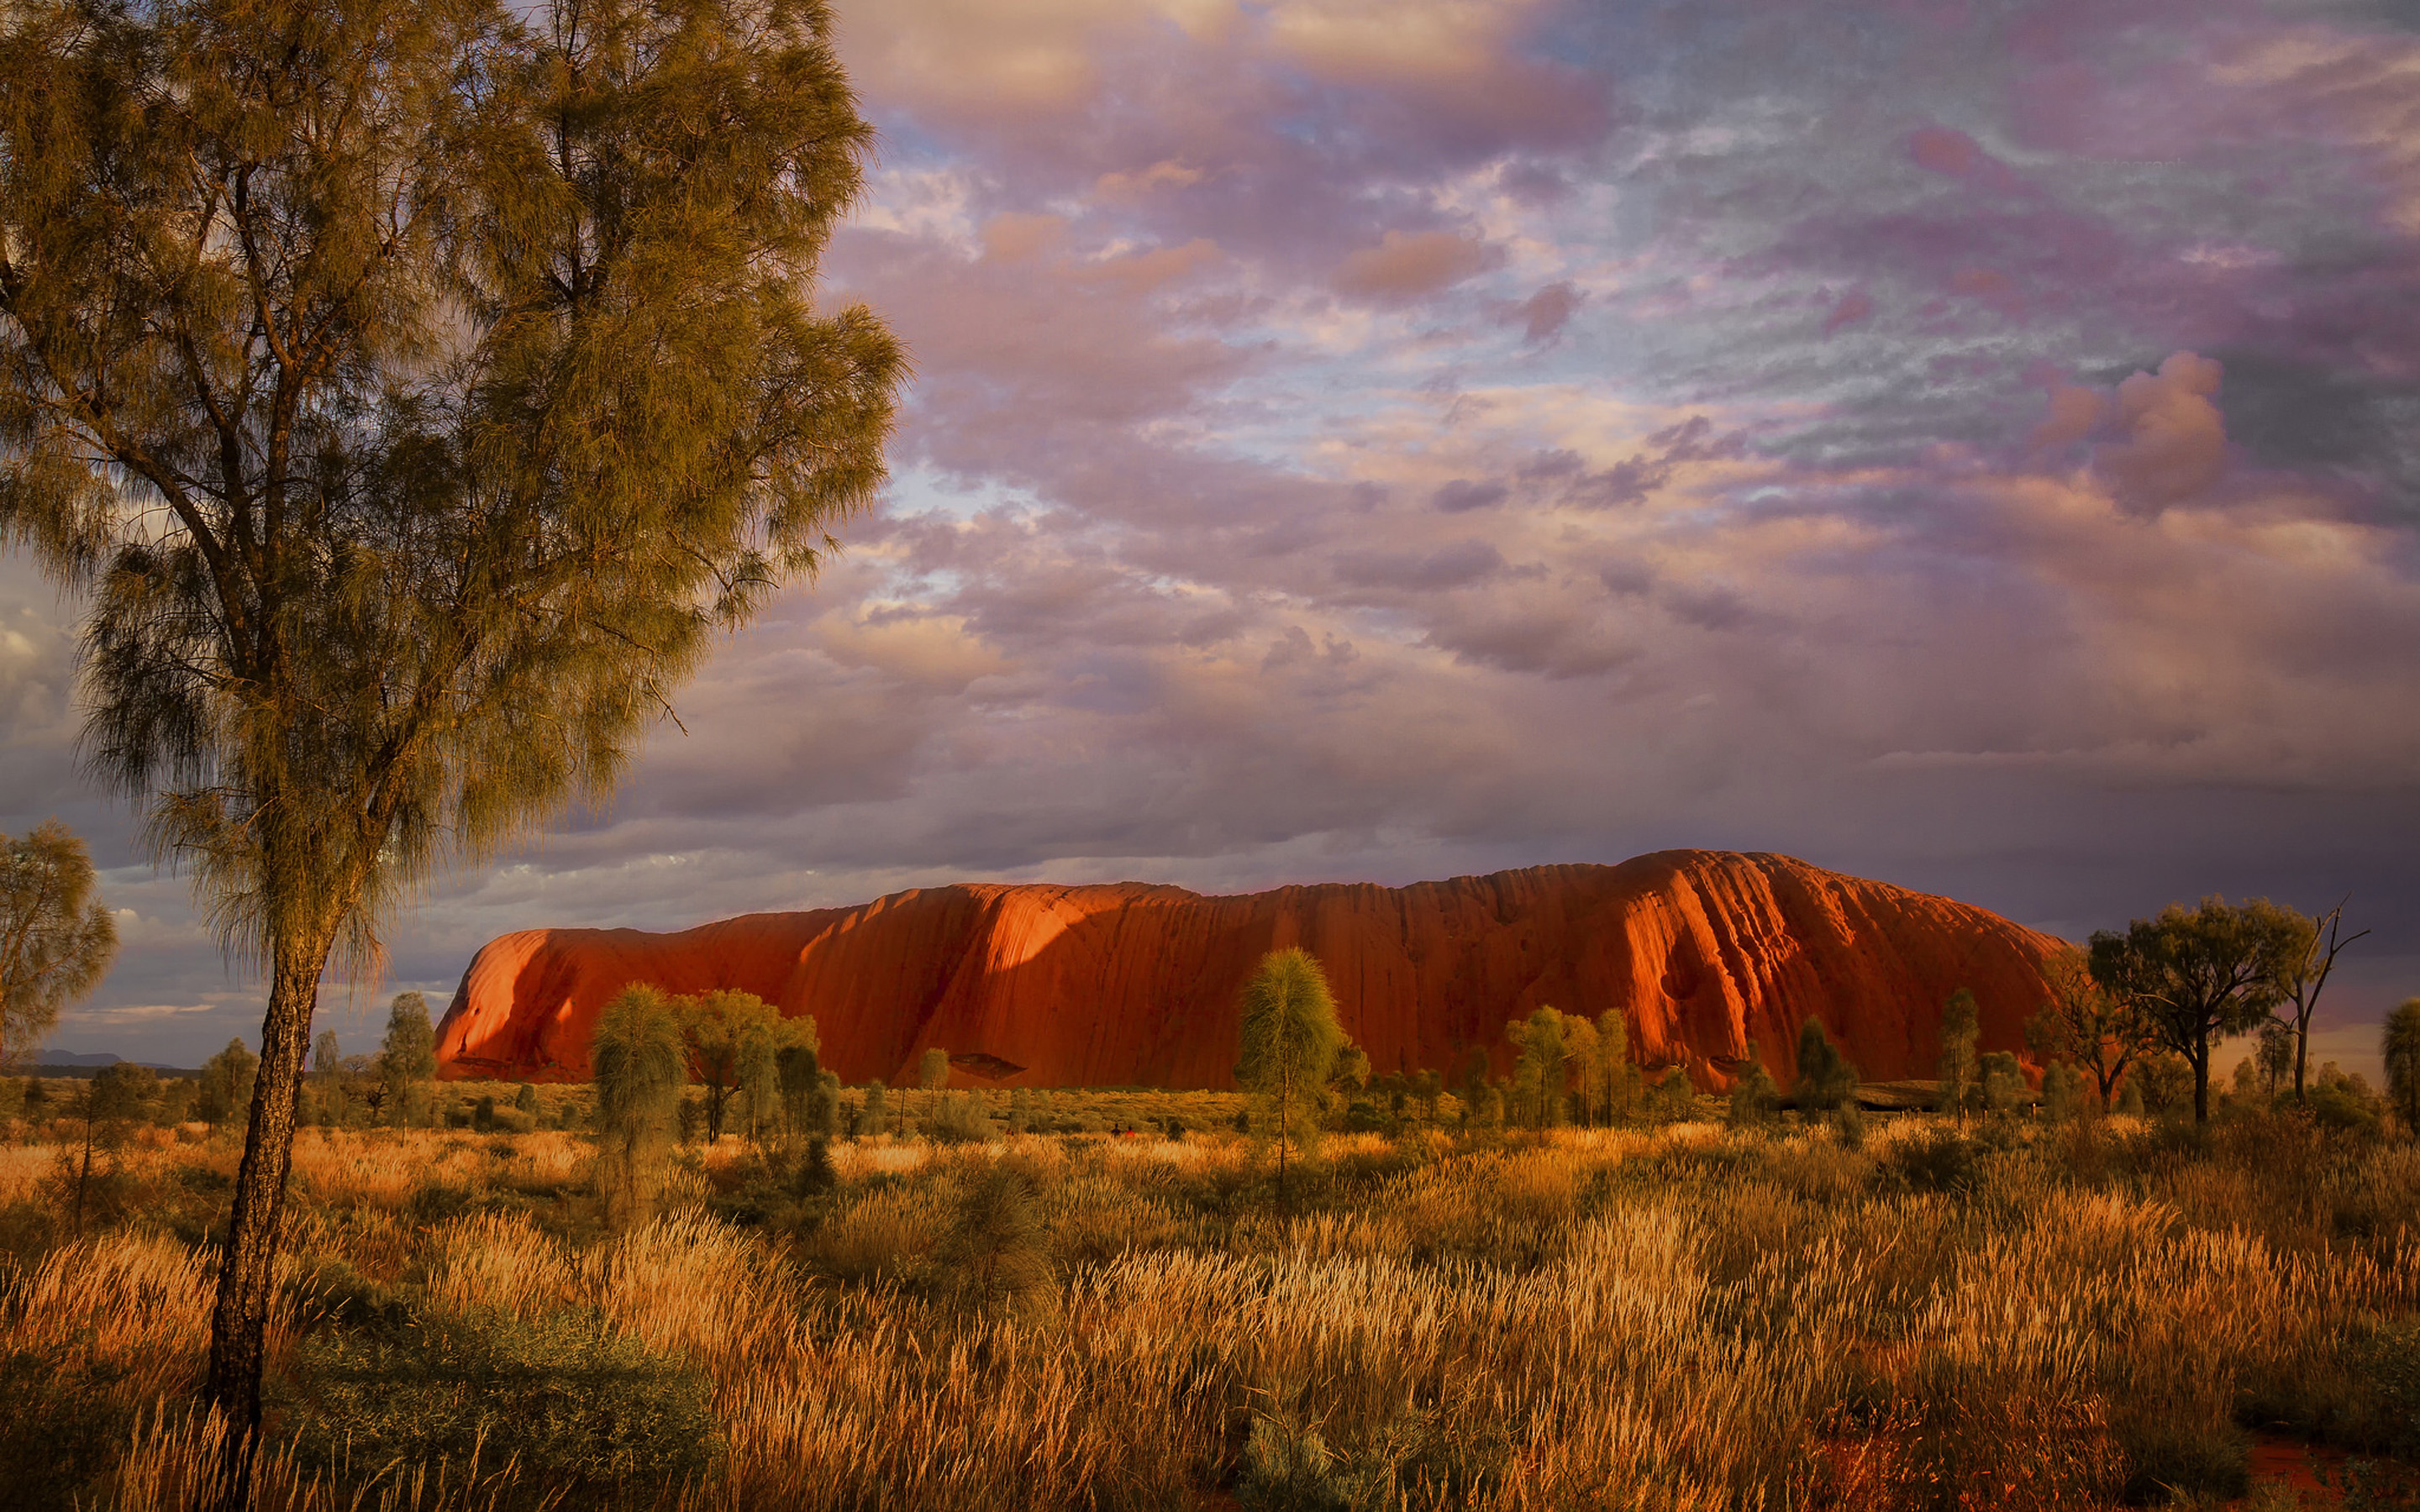  Uluru (Northern Territory, Australia)